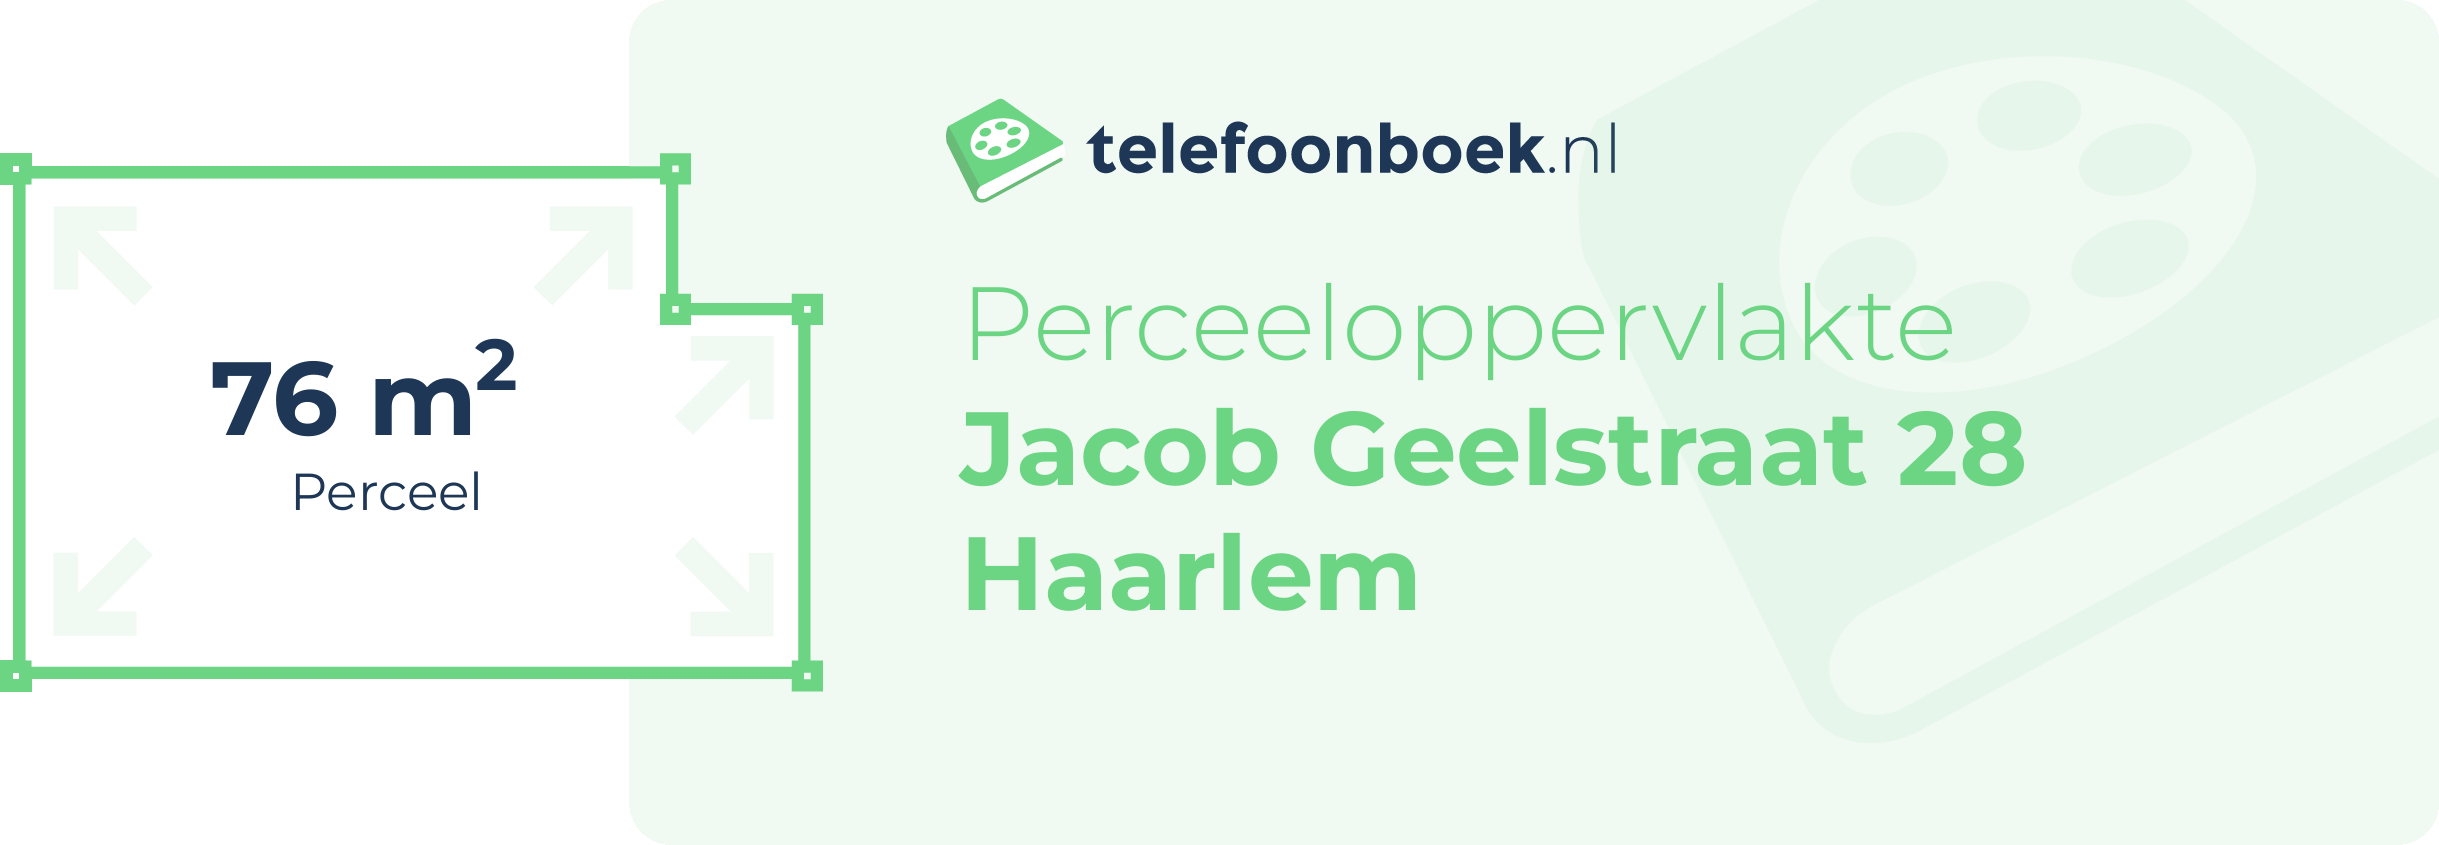 Perceeloppervlakte Jacob Geelstraat 28 Haarlem